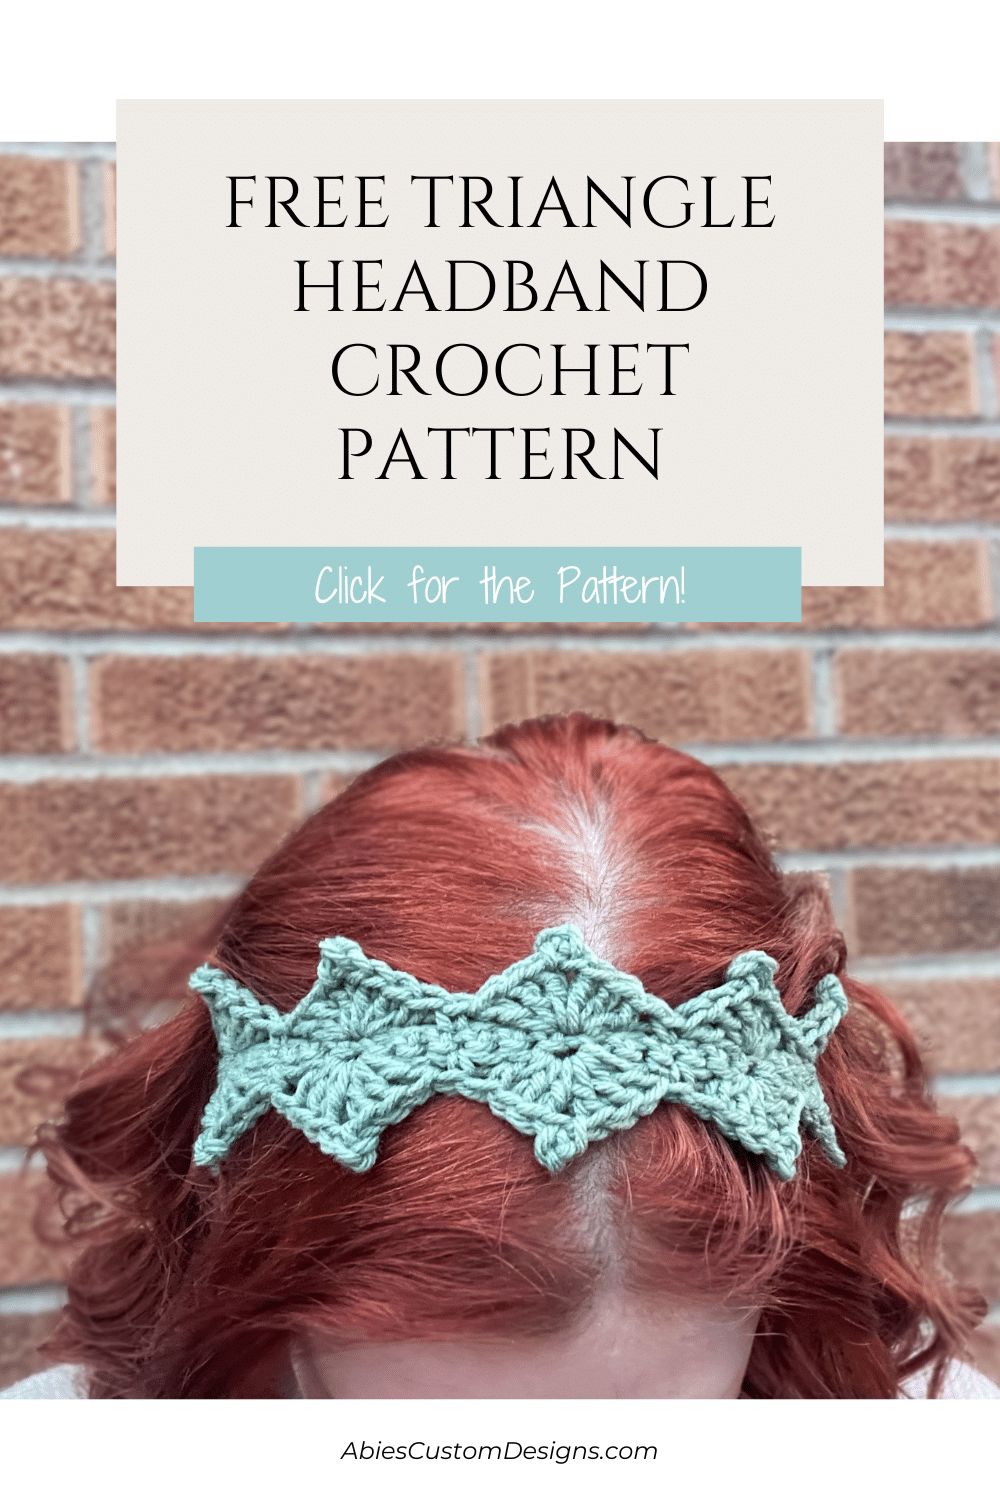 Free Triangle Headband Crochet Pattern